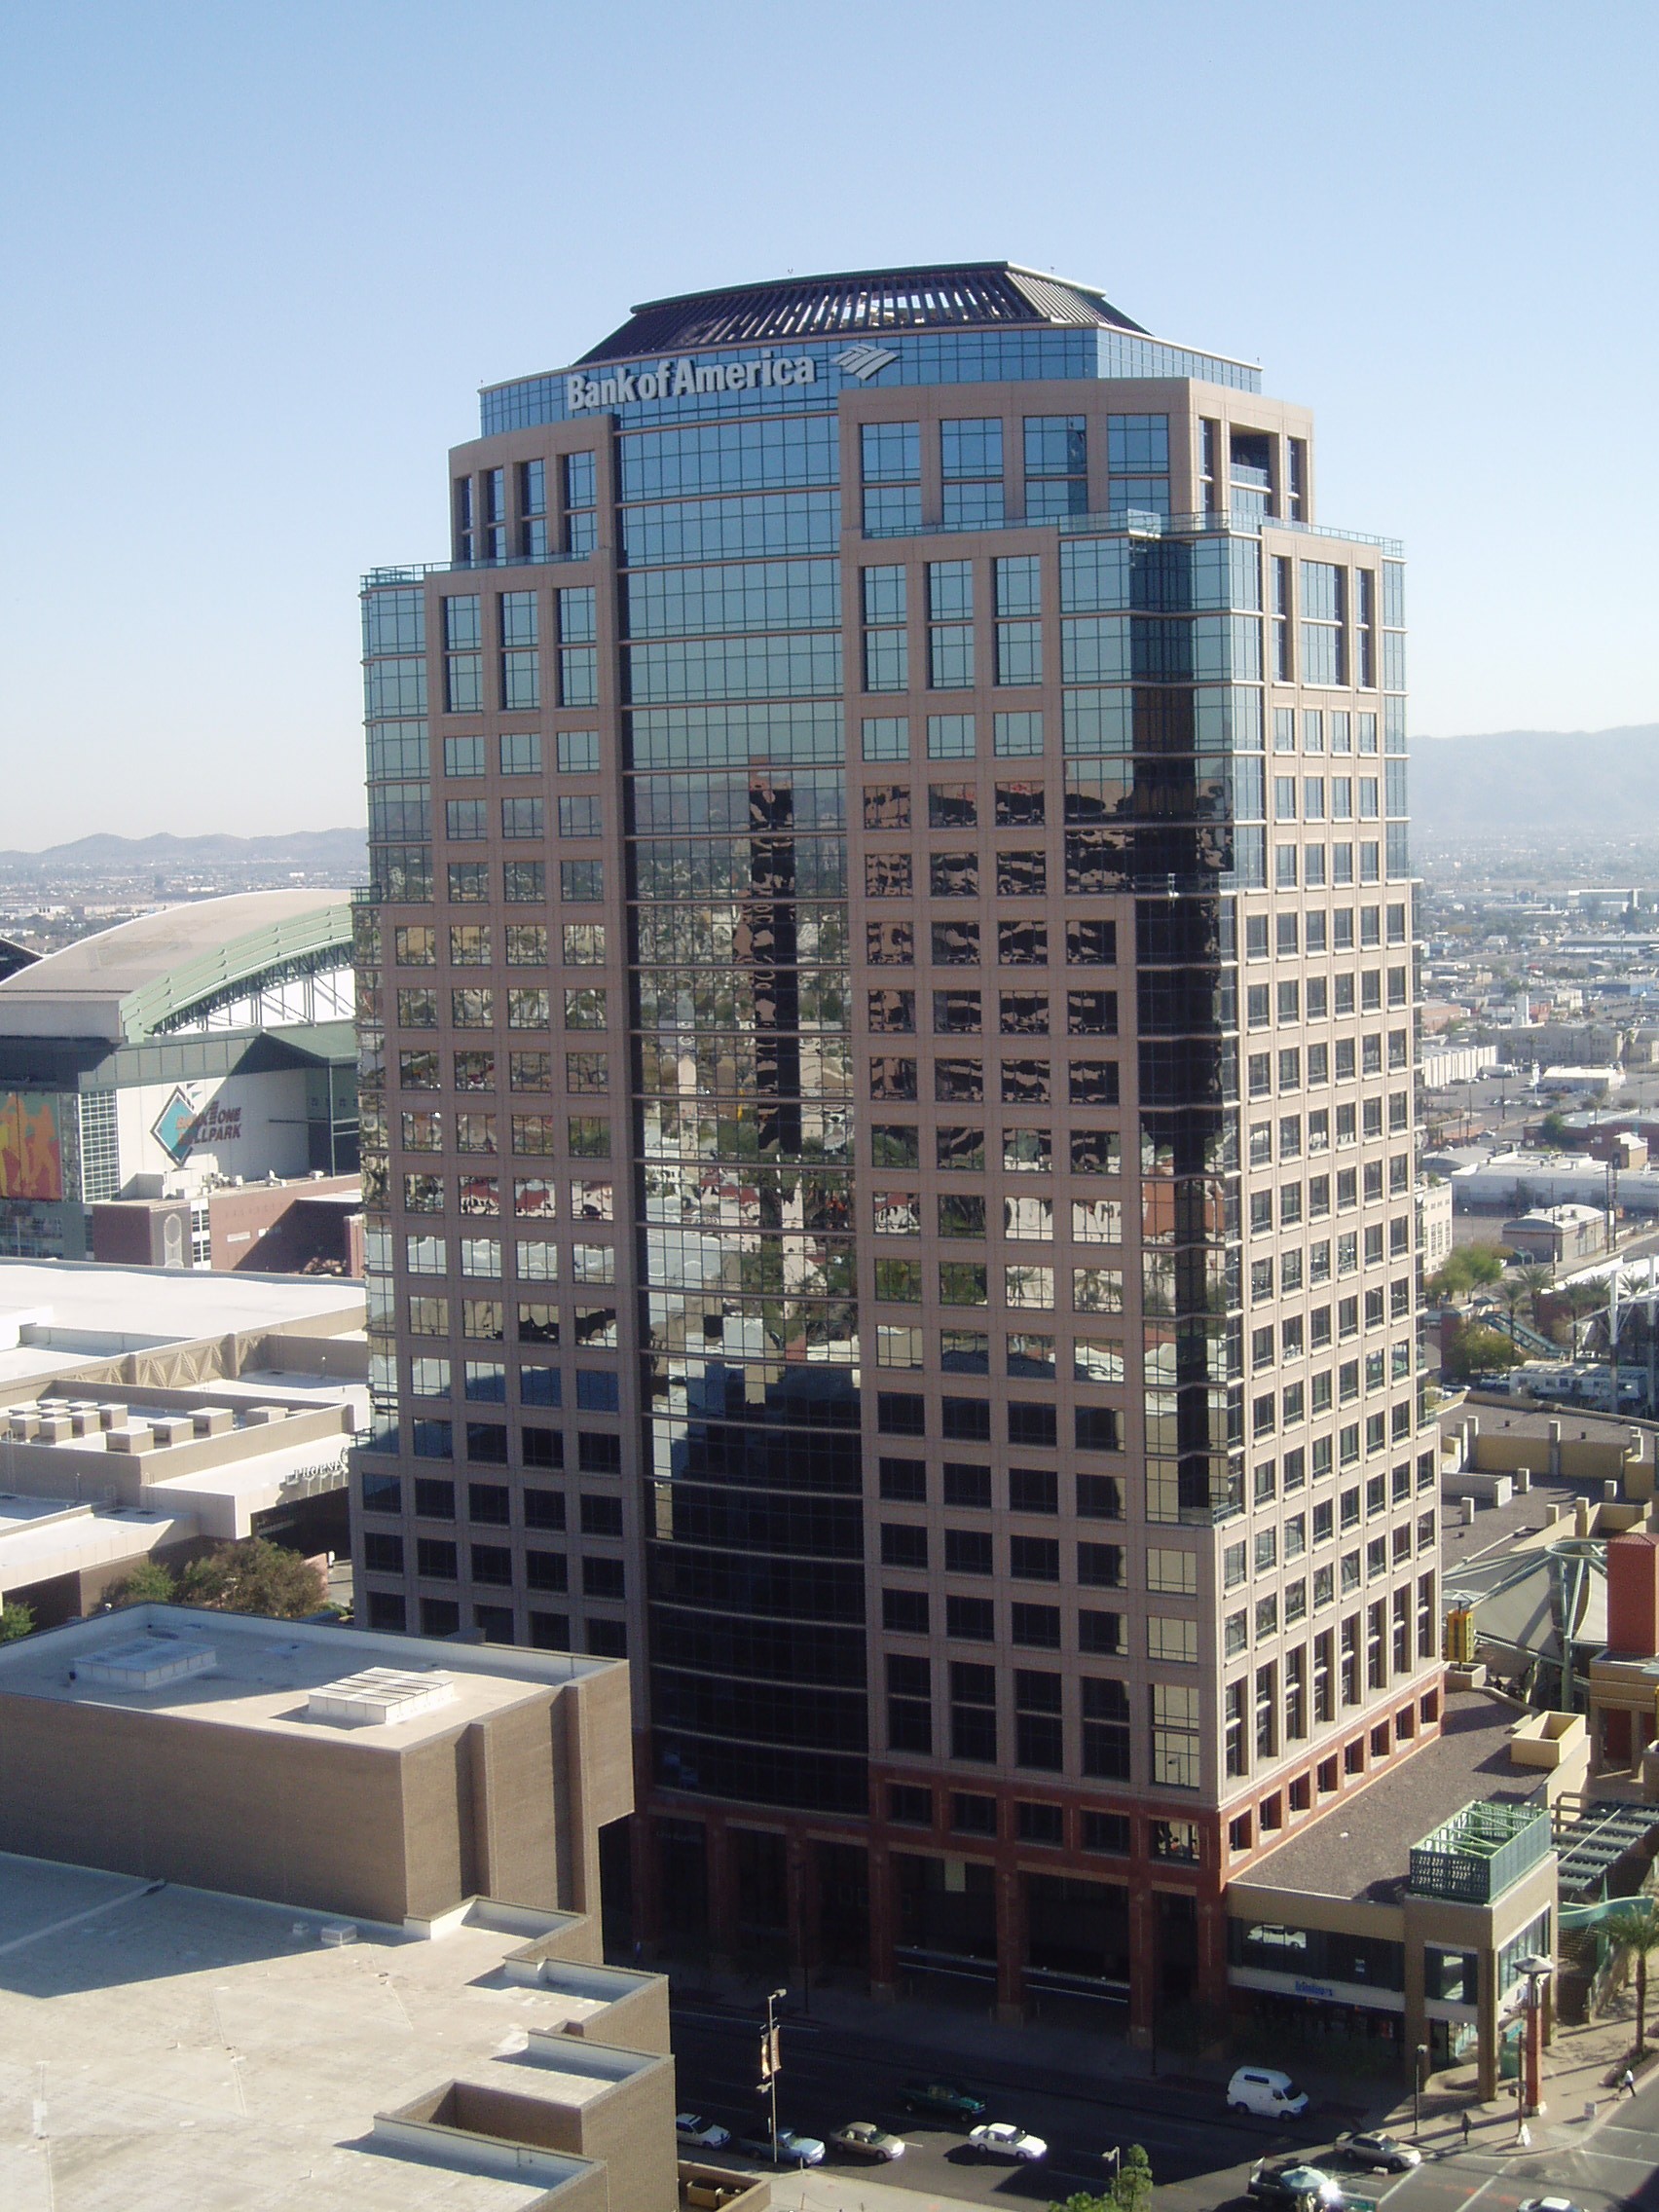 Bank of America Financial Center, 4230 W McDowell Rd, Phoenix, AZ